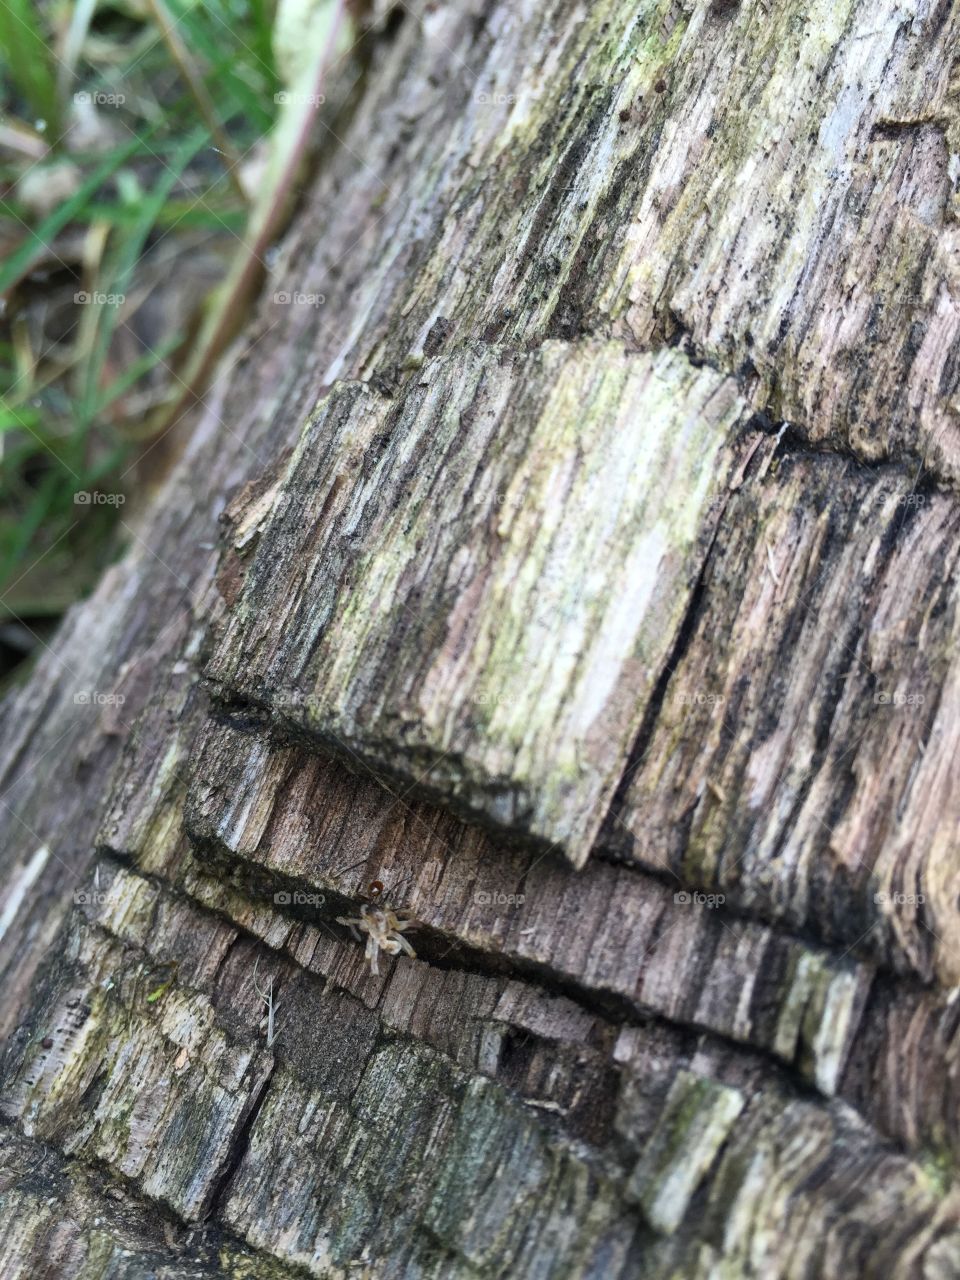 Log wood grain pattern